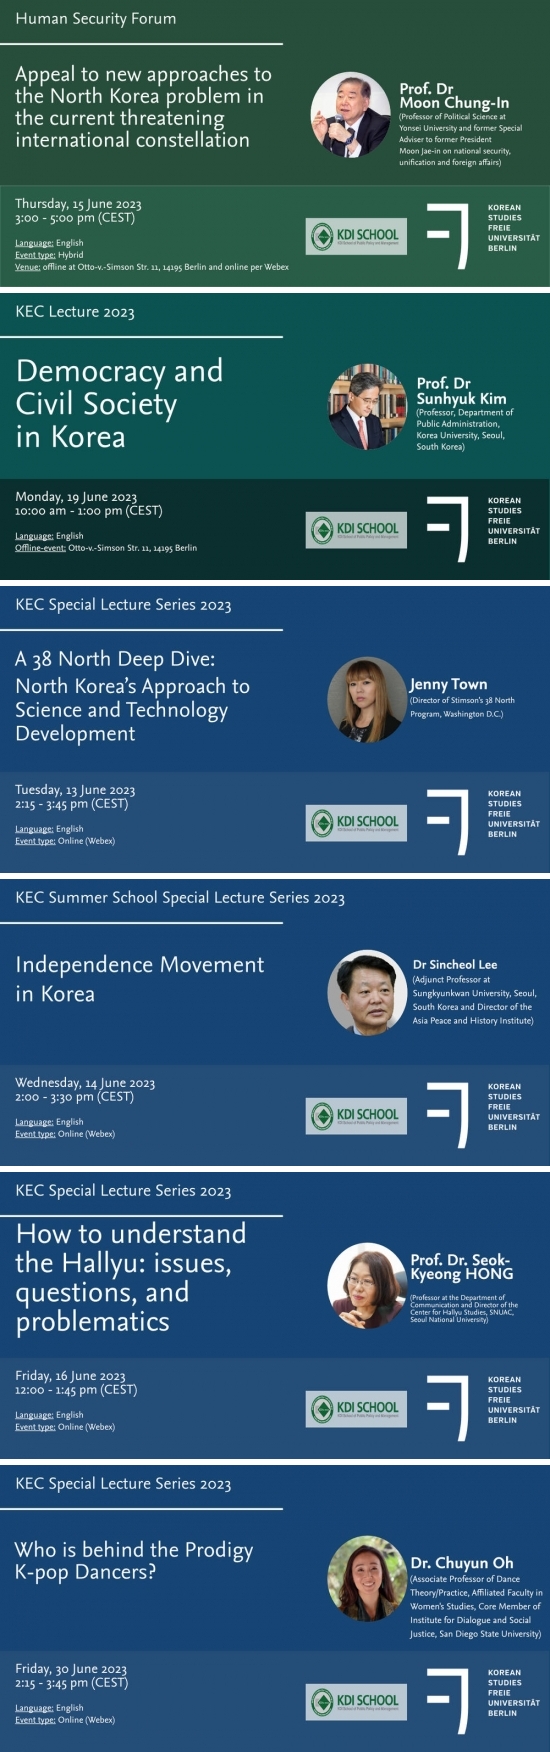 [KDI School-FUB IKS] Upcoming Korea Europe Center (KEC) Events in June